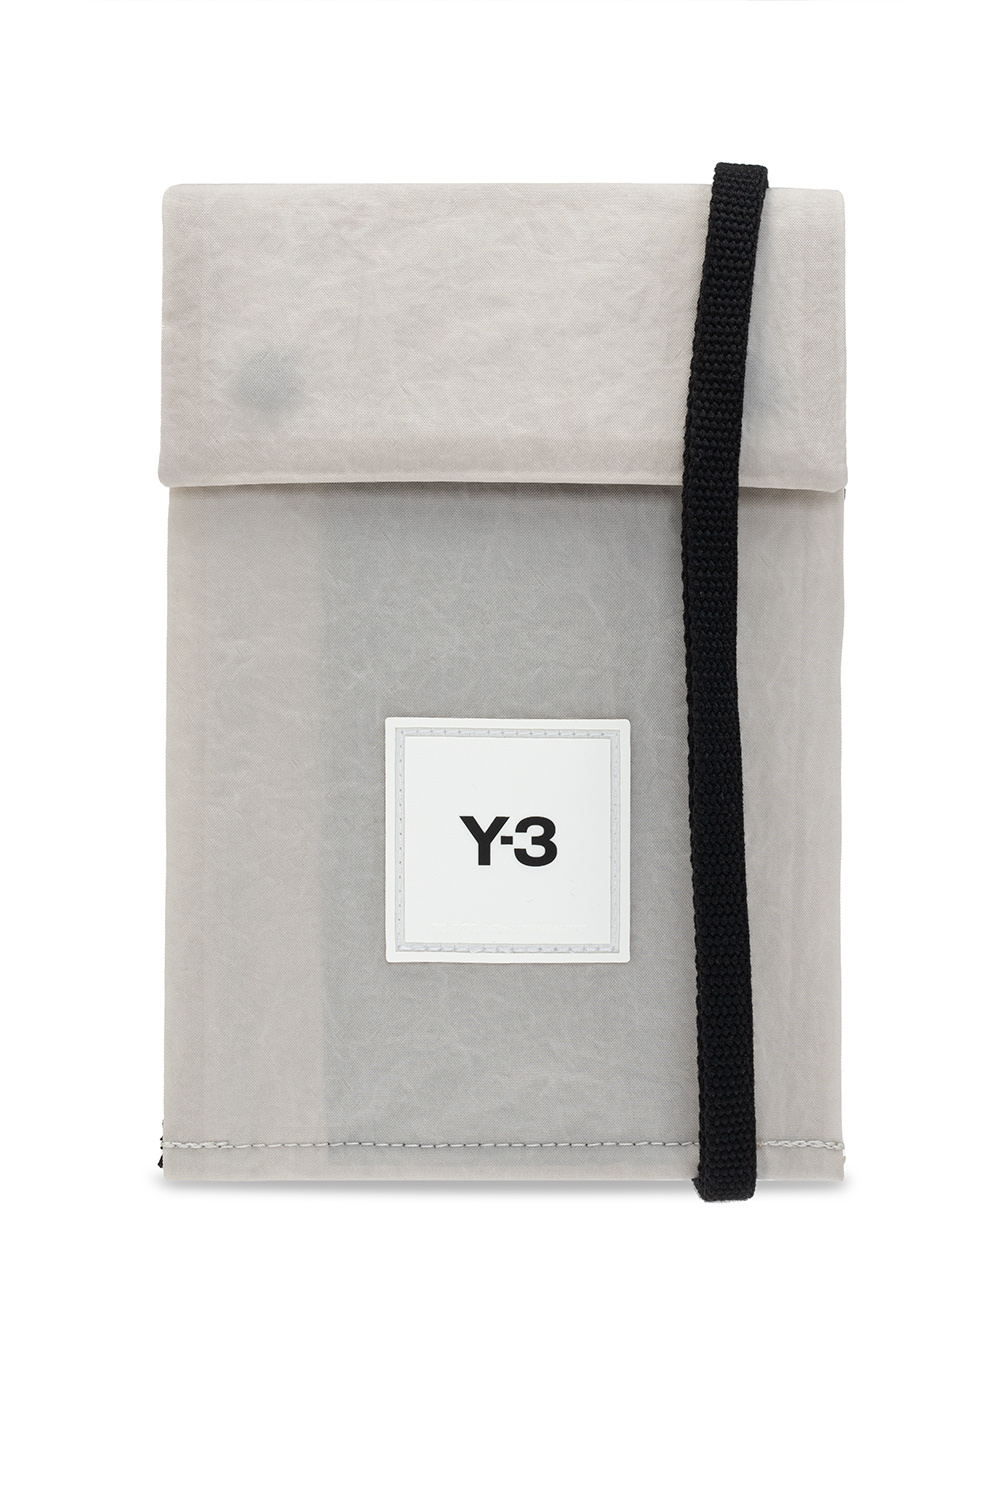 Y-3 Yohji Yamamoto Alexander McQueen Purple Mini 'The Curve' Bag